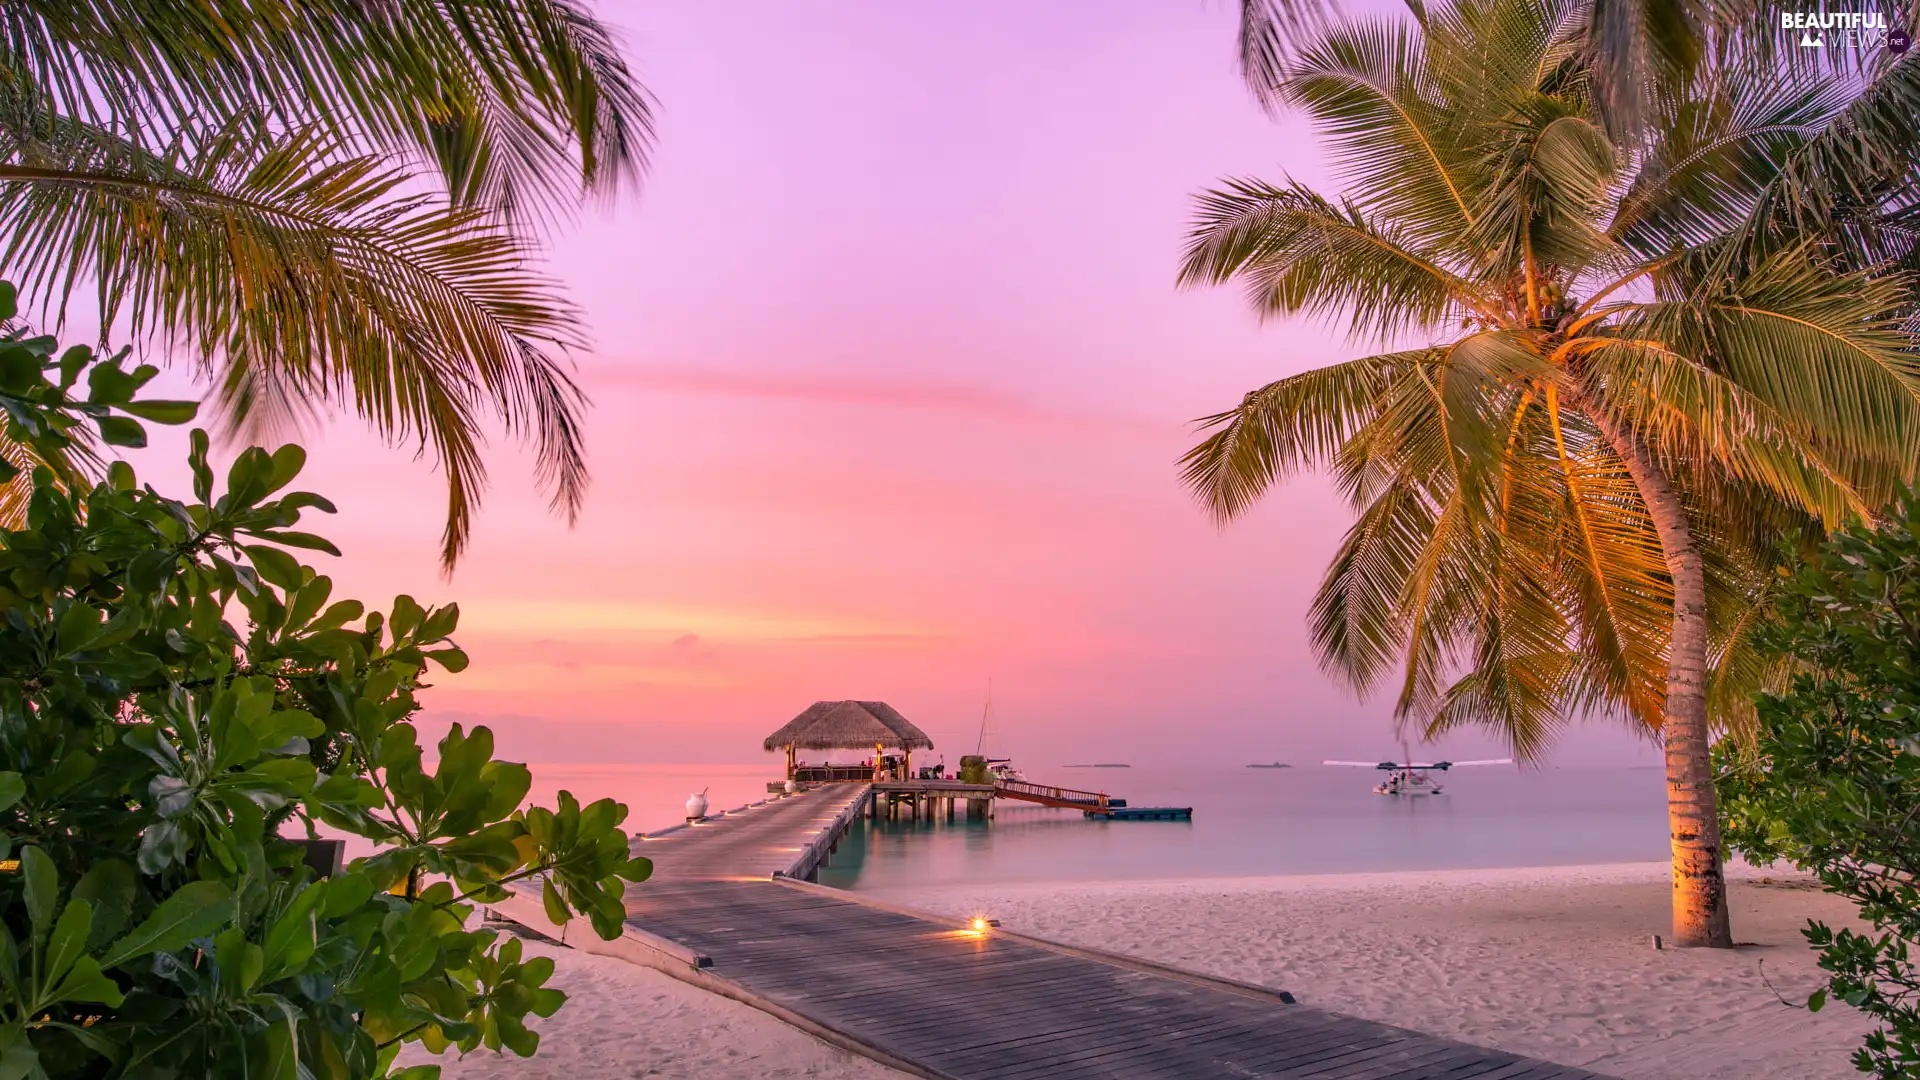 Platform, arbour, Maldives, Beaches, holiday, Beaches, sea, Palms